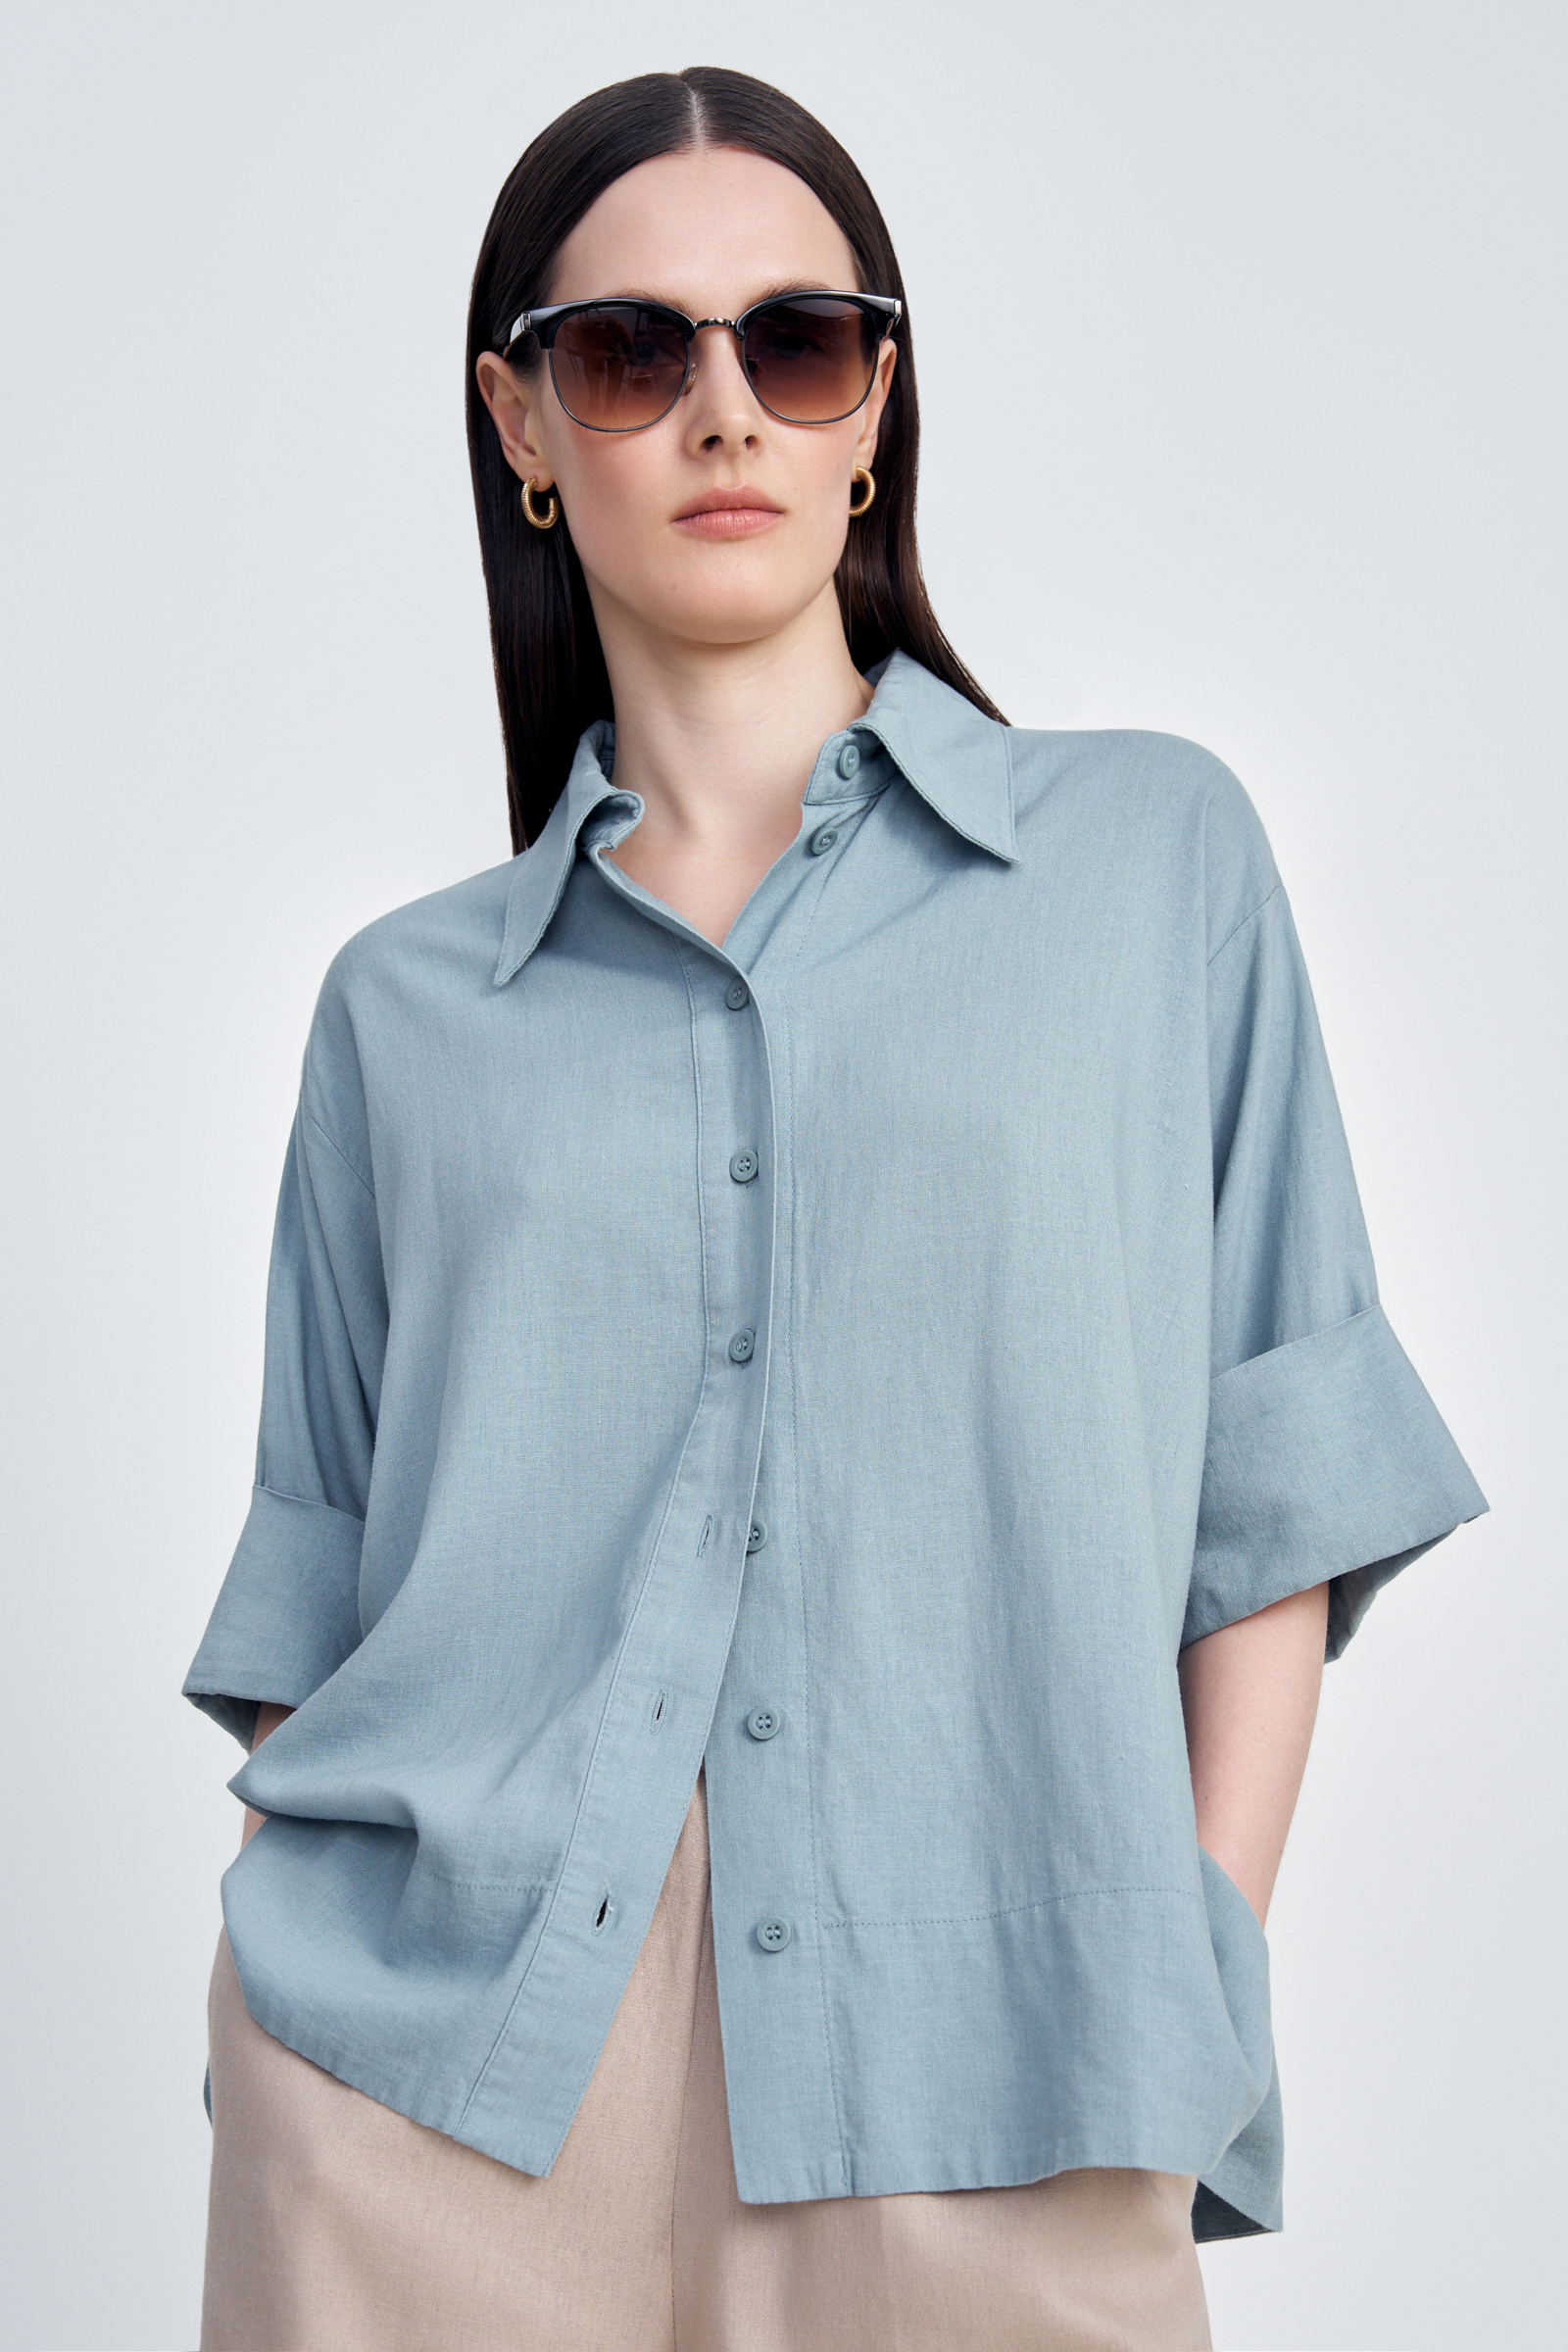 Рубашка женская Finn Flare FSD11066 голубая XL